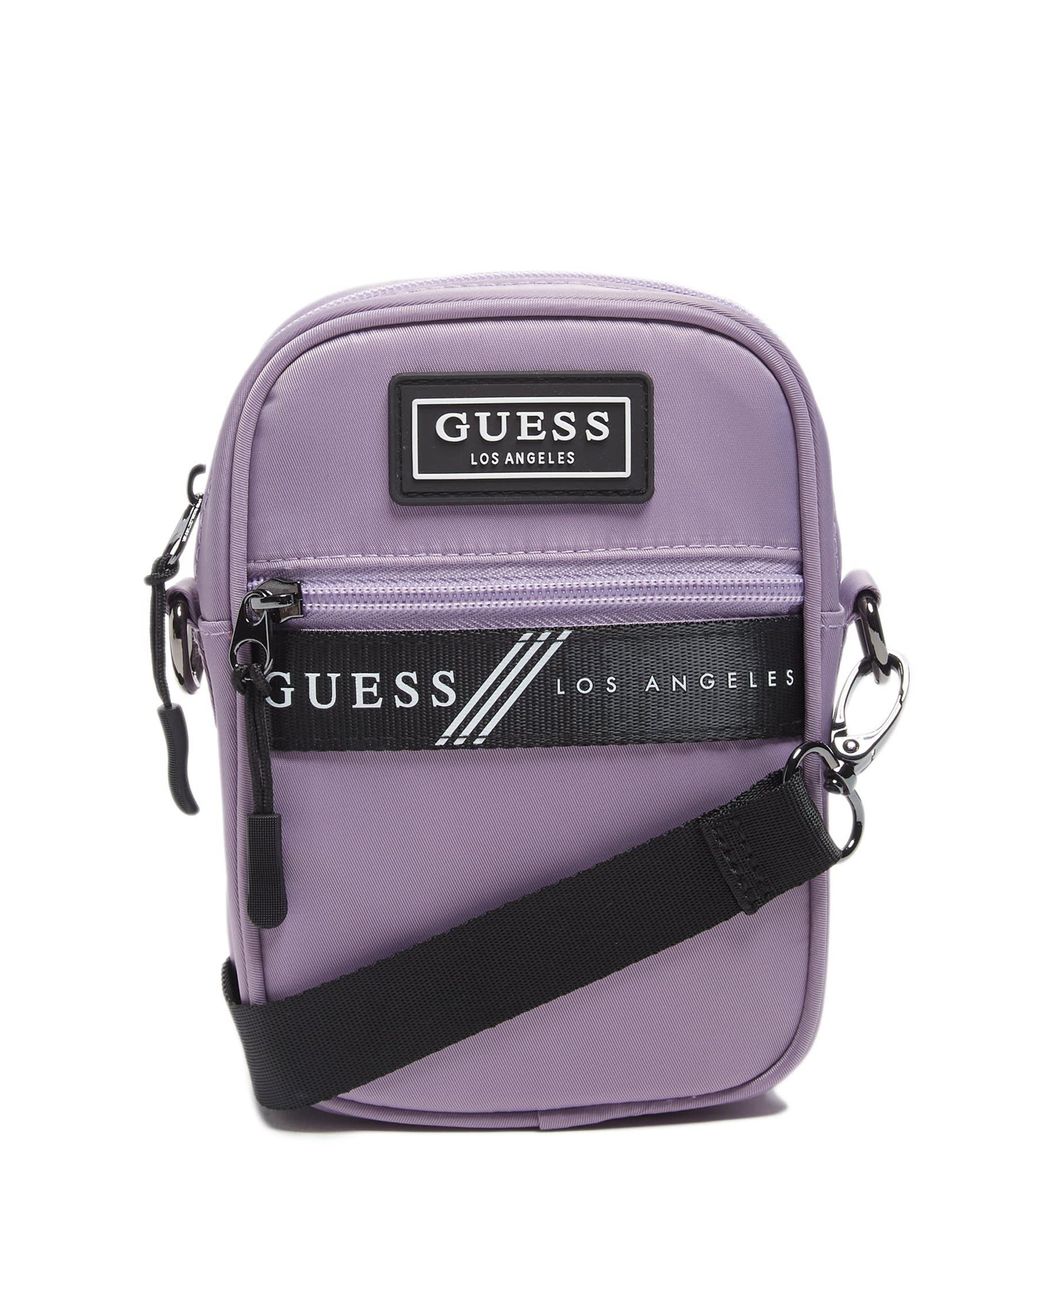 SHOP PREMIUM OUTLETS Guess logo-tape nylon tote bag 29.99